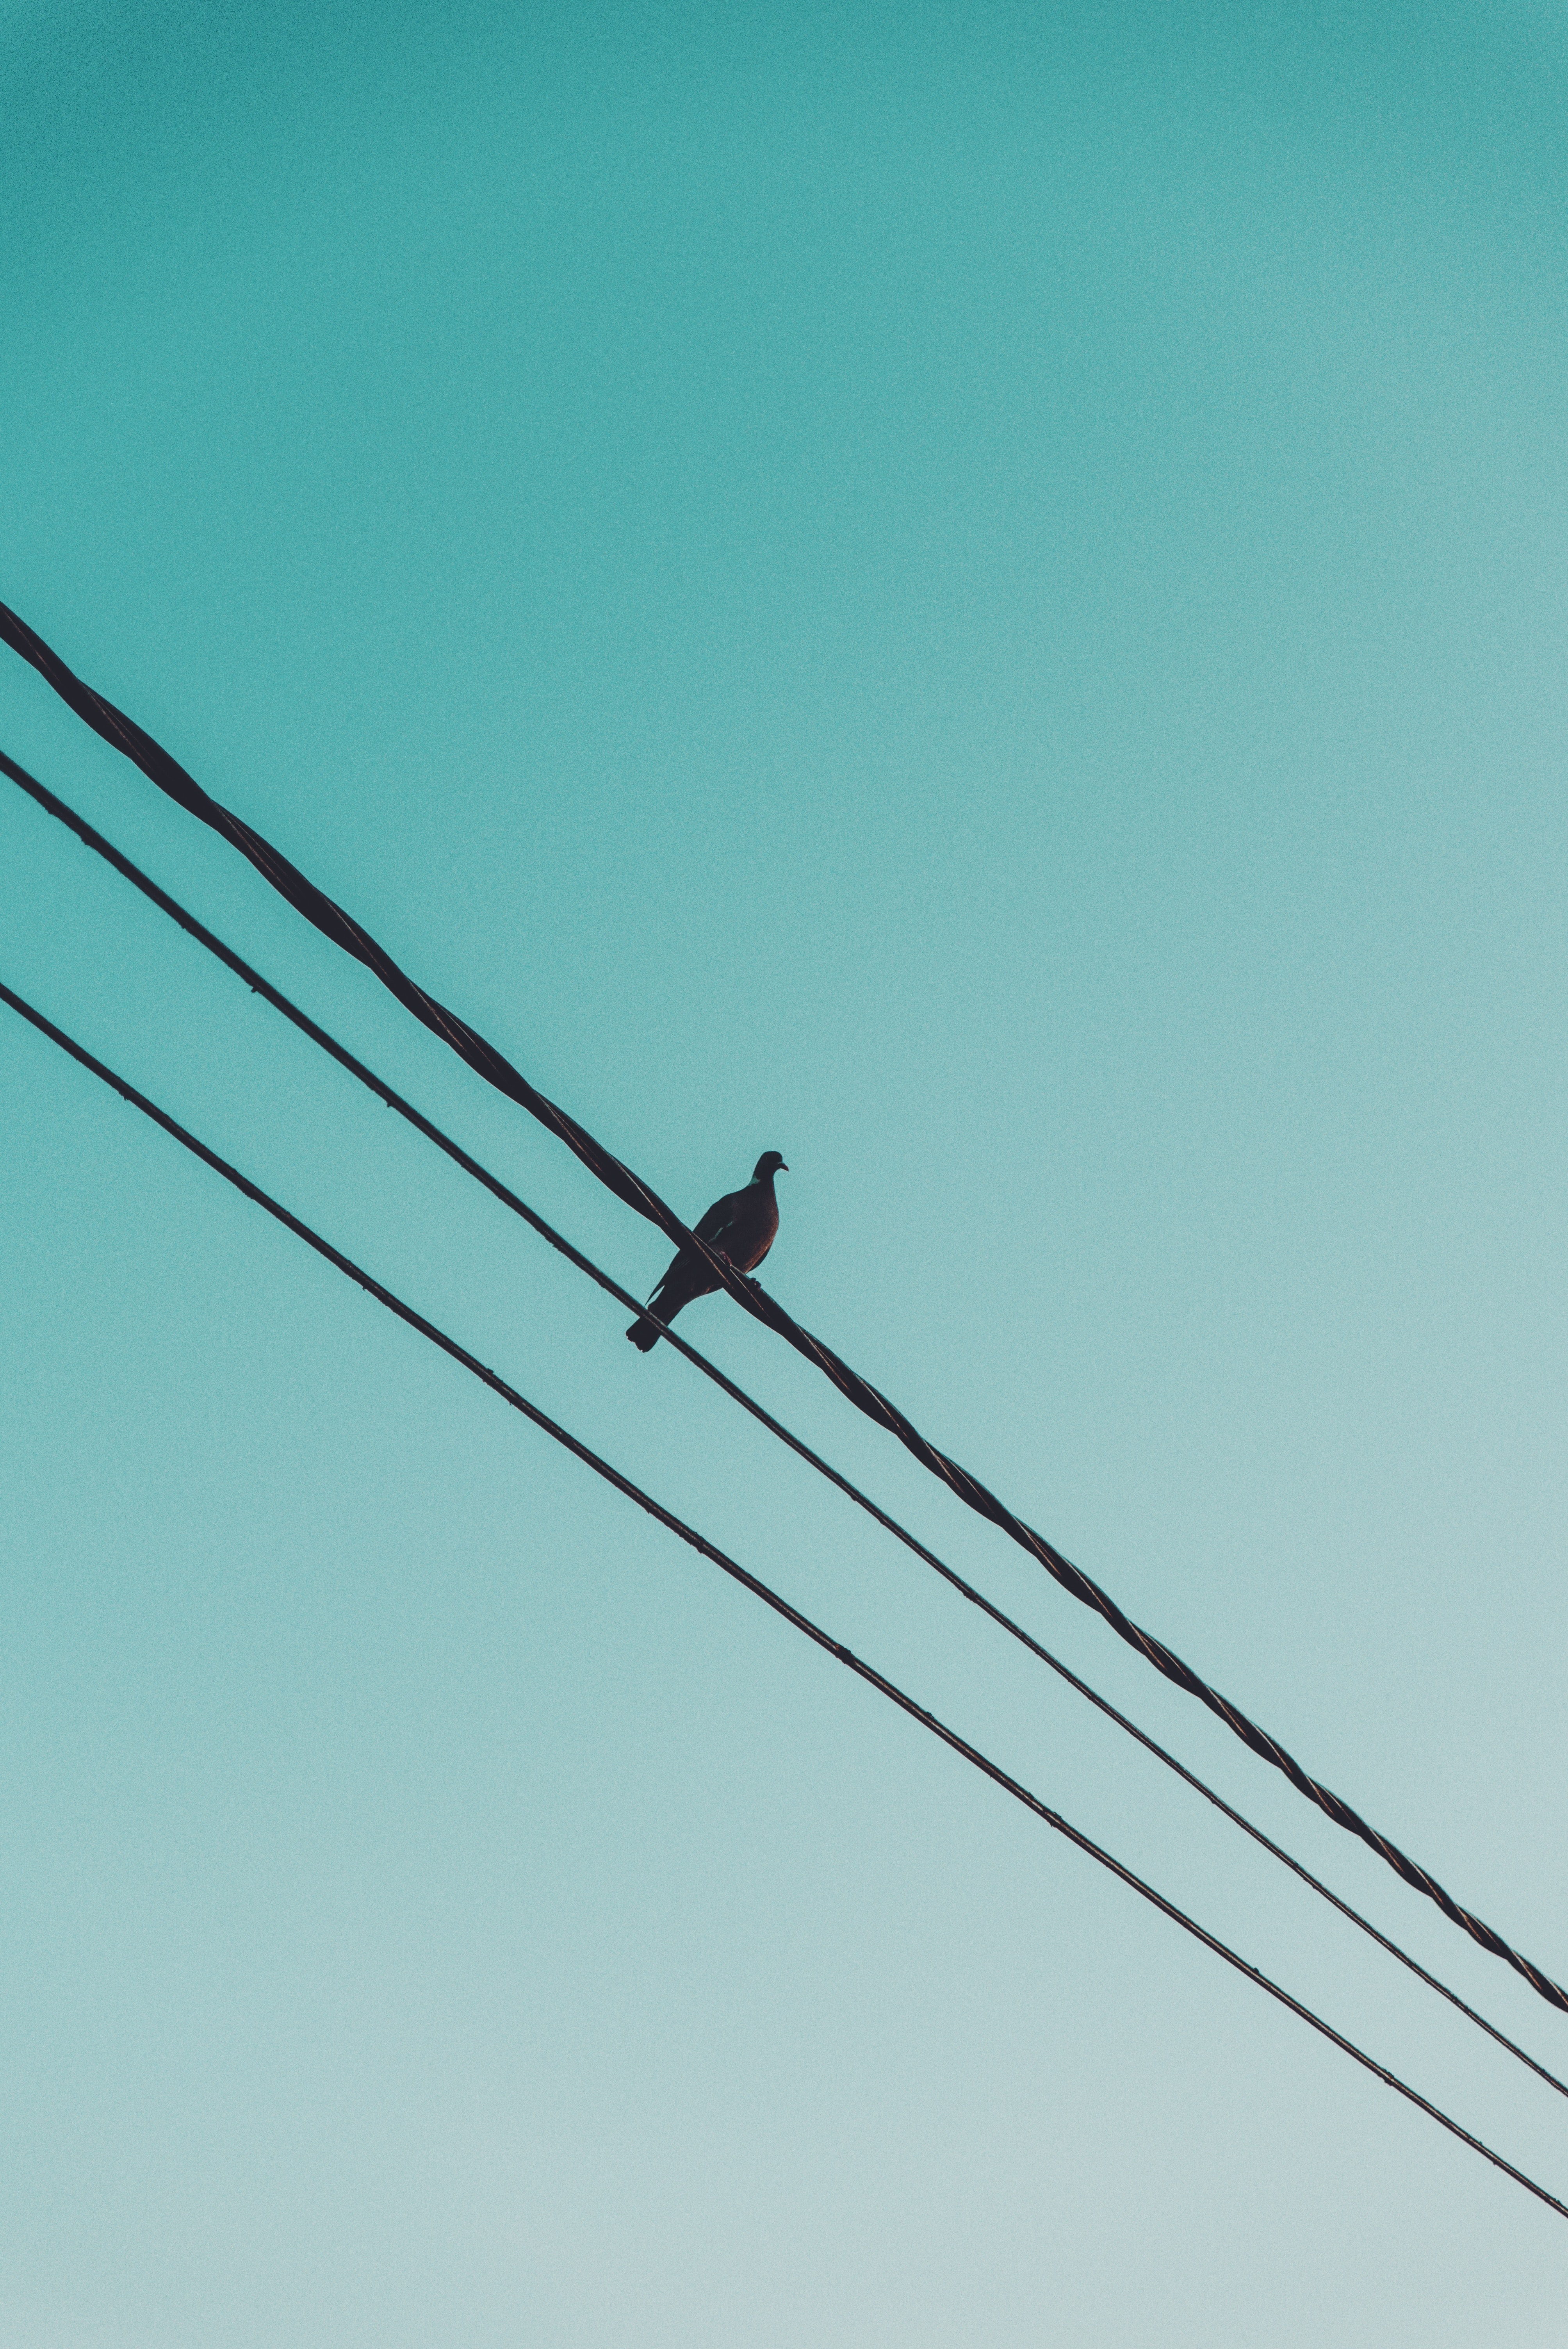 dove, animals, sky, wires, wire